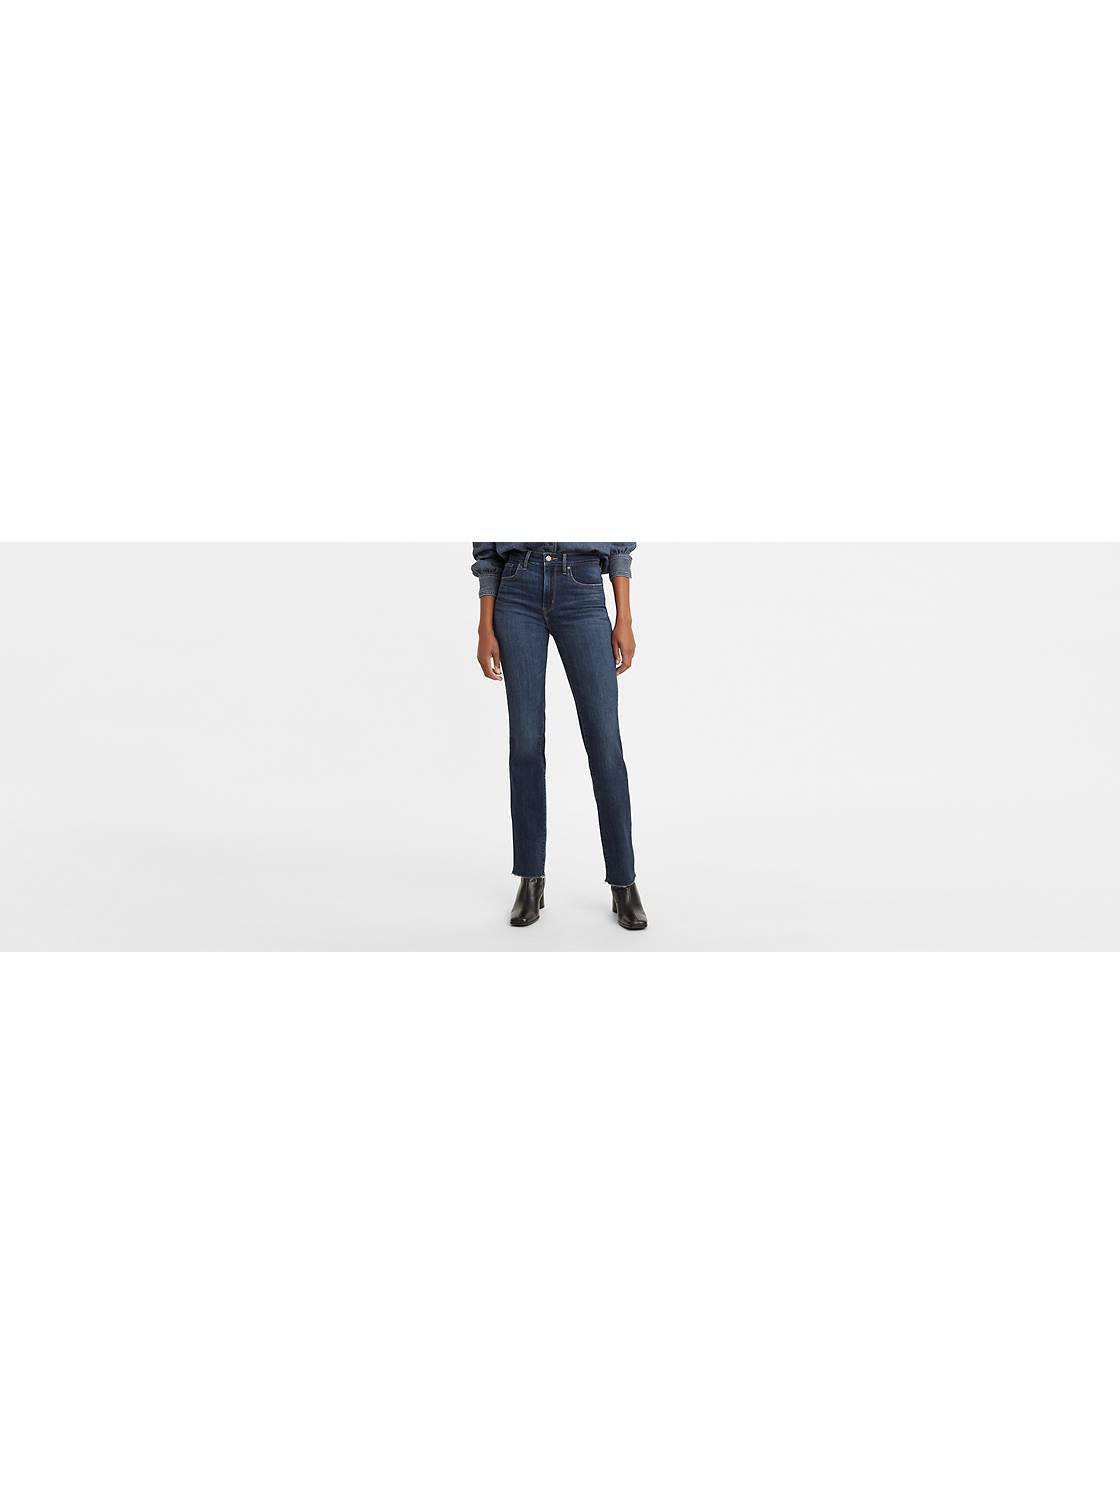 Women's Slim Jeans: Shop Slim Women's Jeans | Levi's®